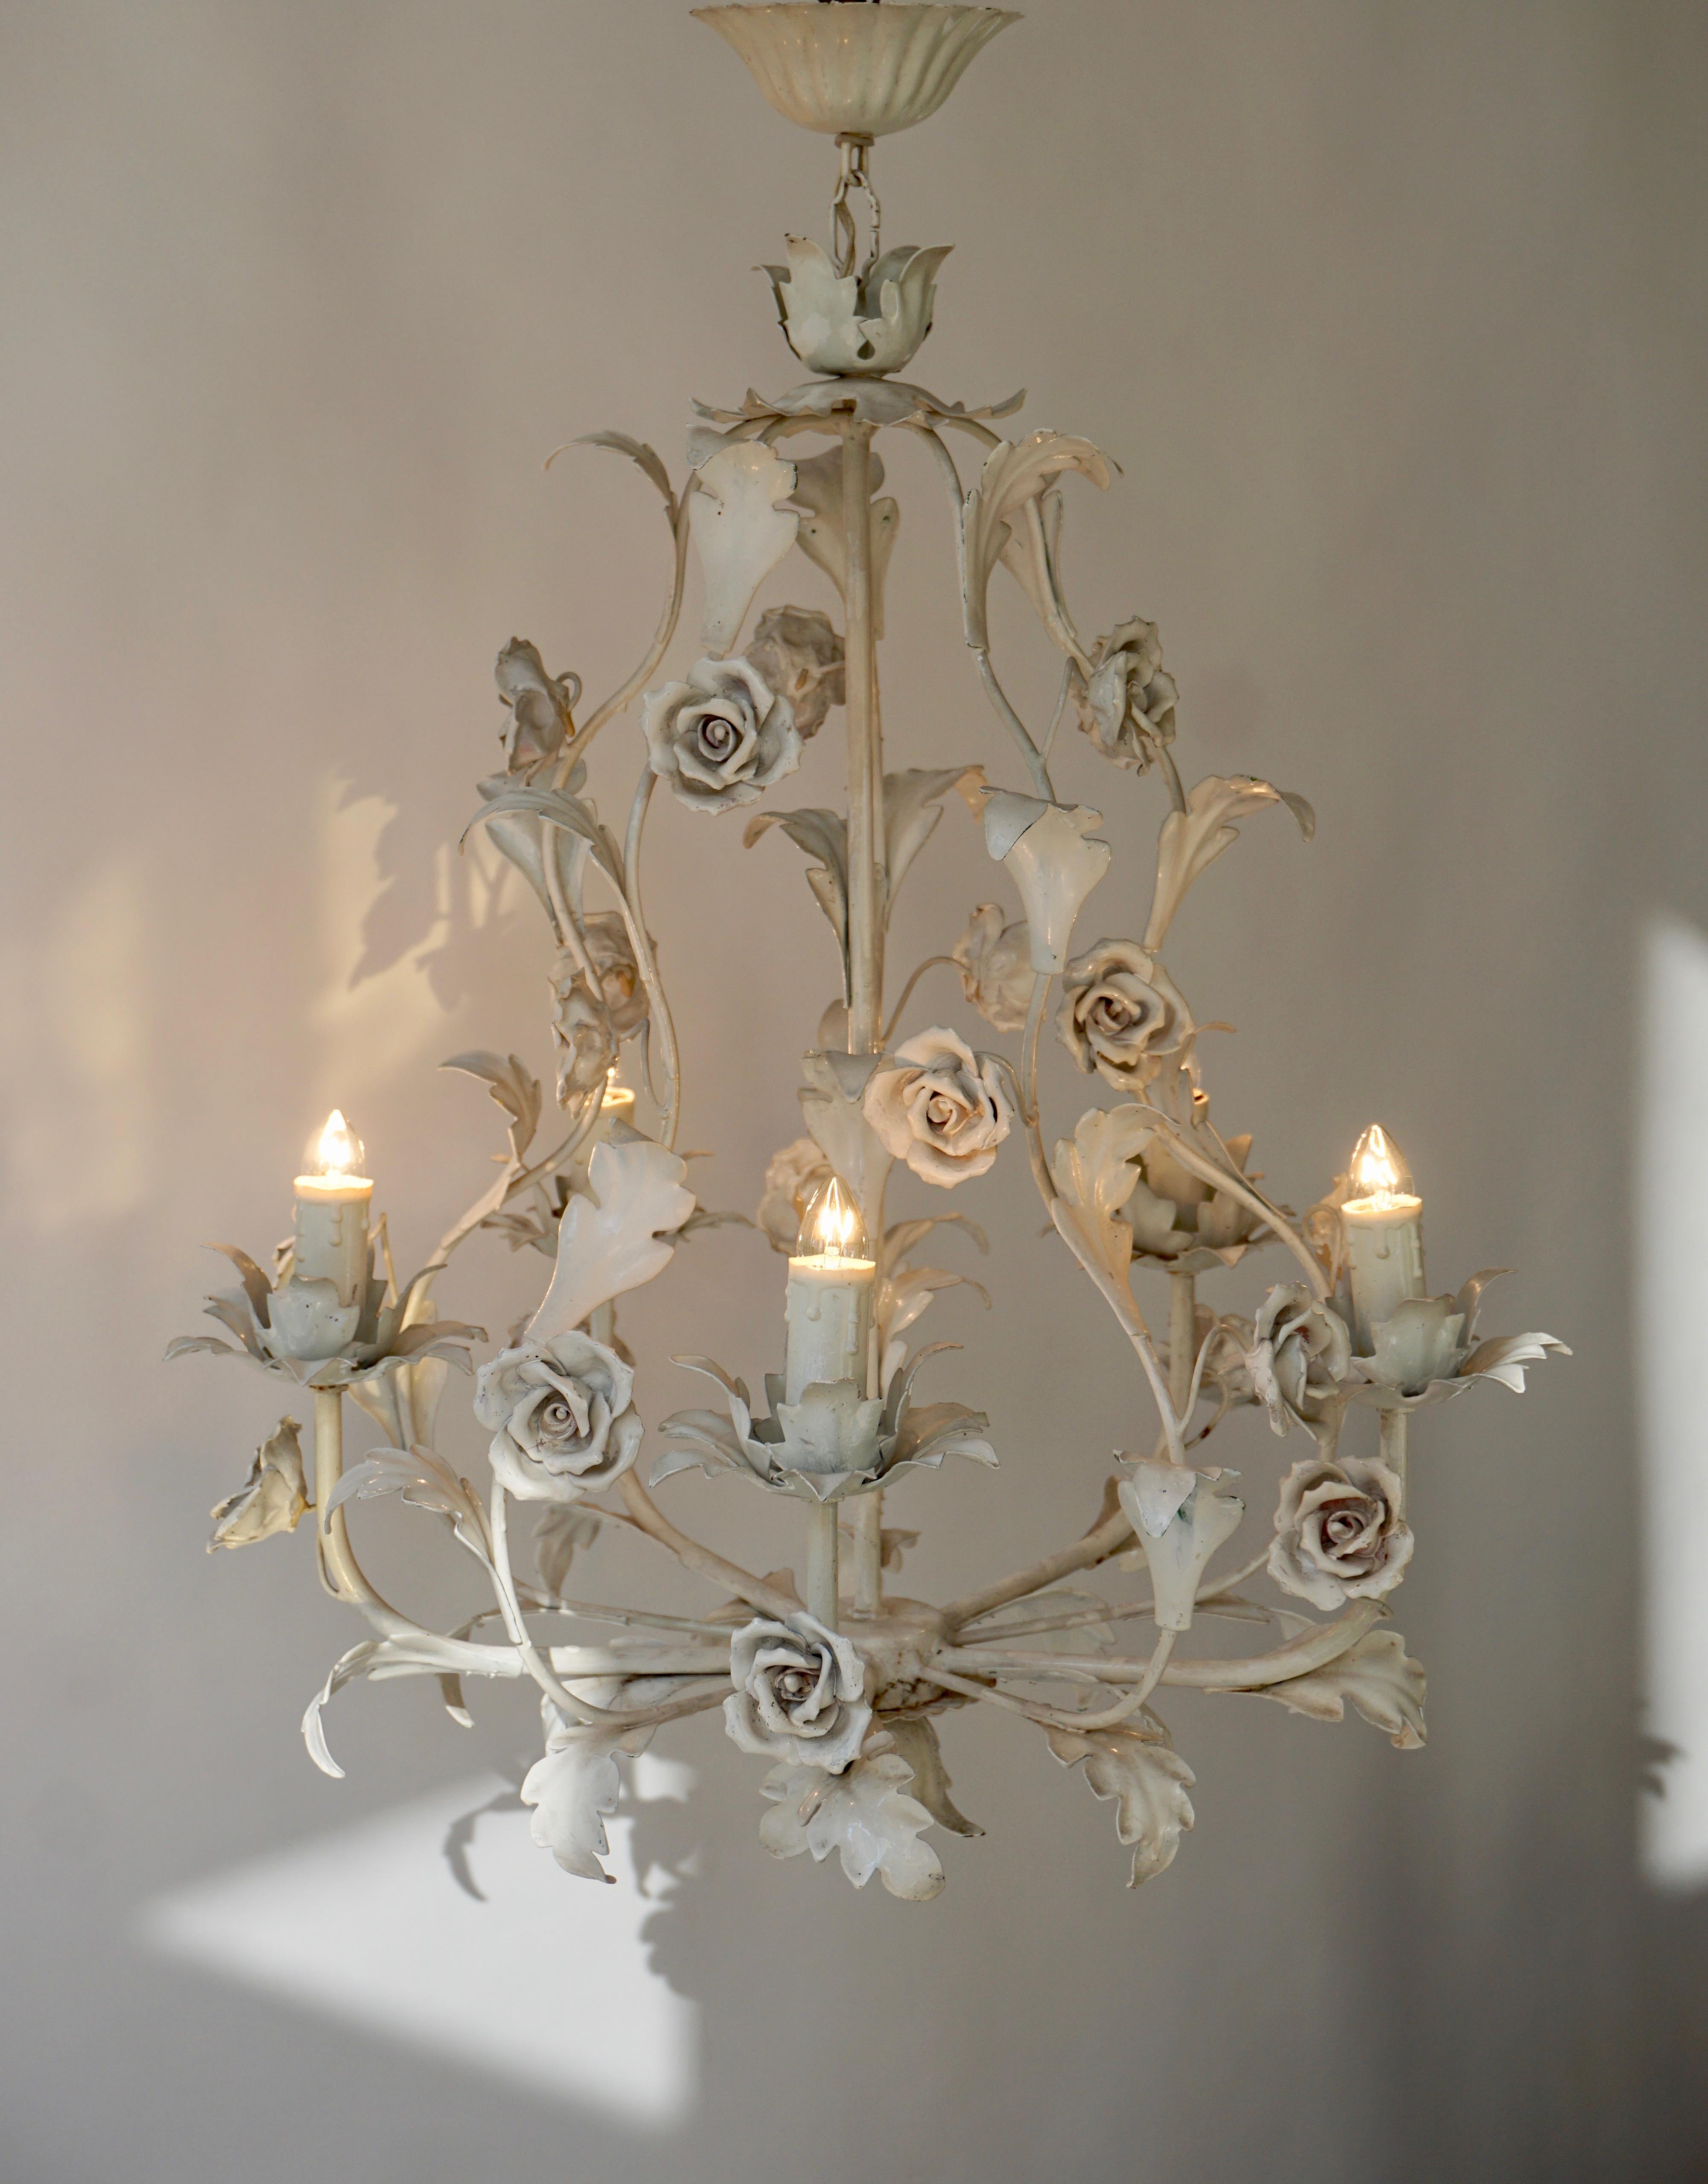 Italian flower chandelier.
Diameter 50 cm.
Height fixture 60 cm.
Total height 70 cm.
Five E14 bulbs.